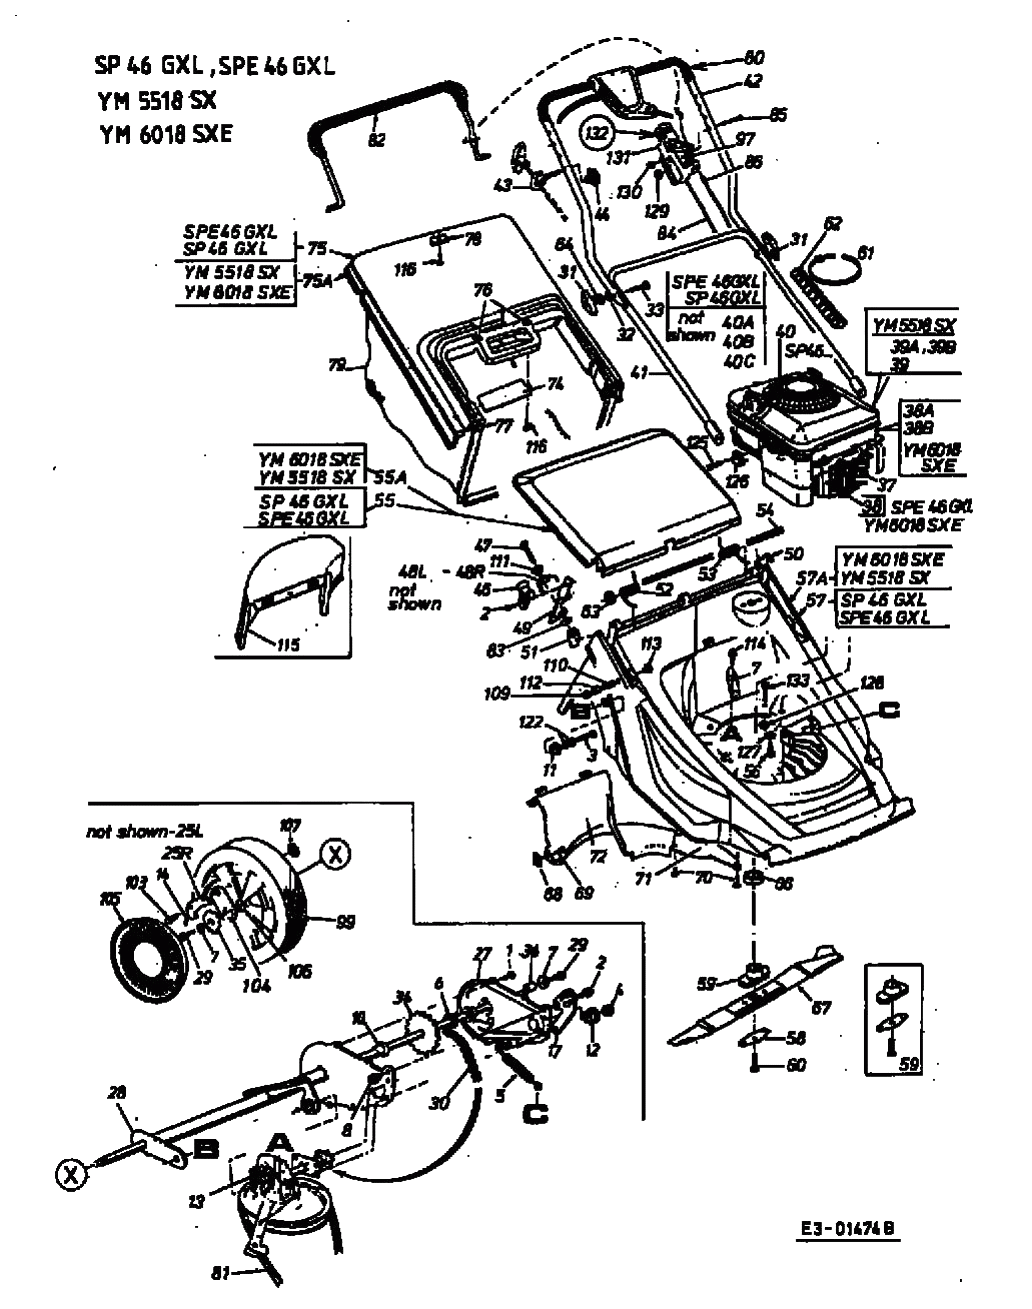 MTD Артикул 12A-X78C678 (год выпуска 2002). Основная деталировка